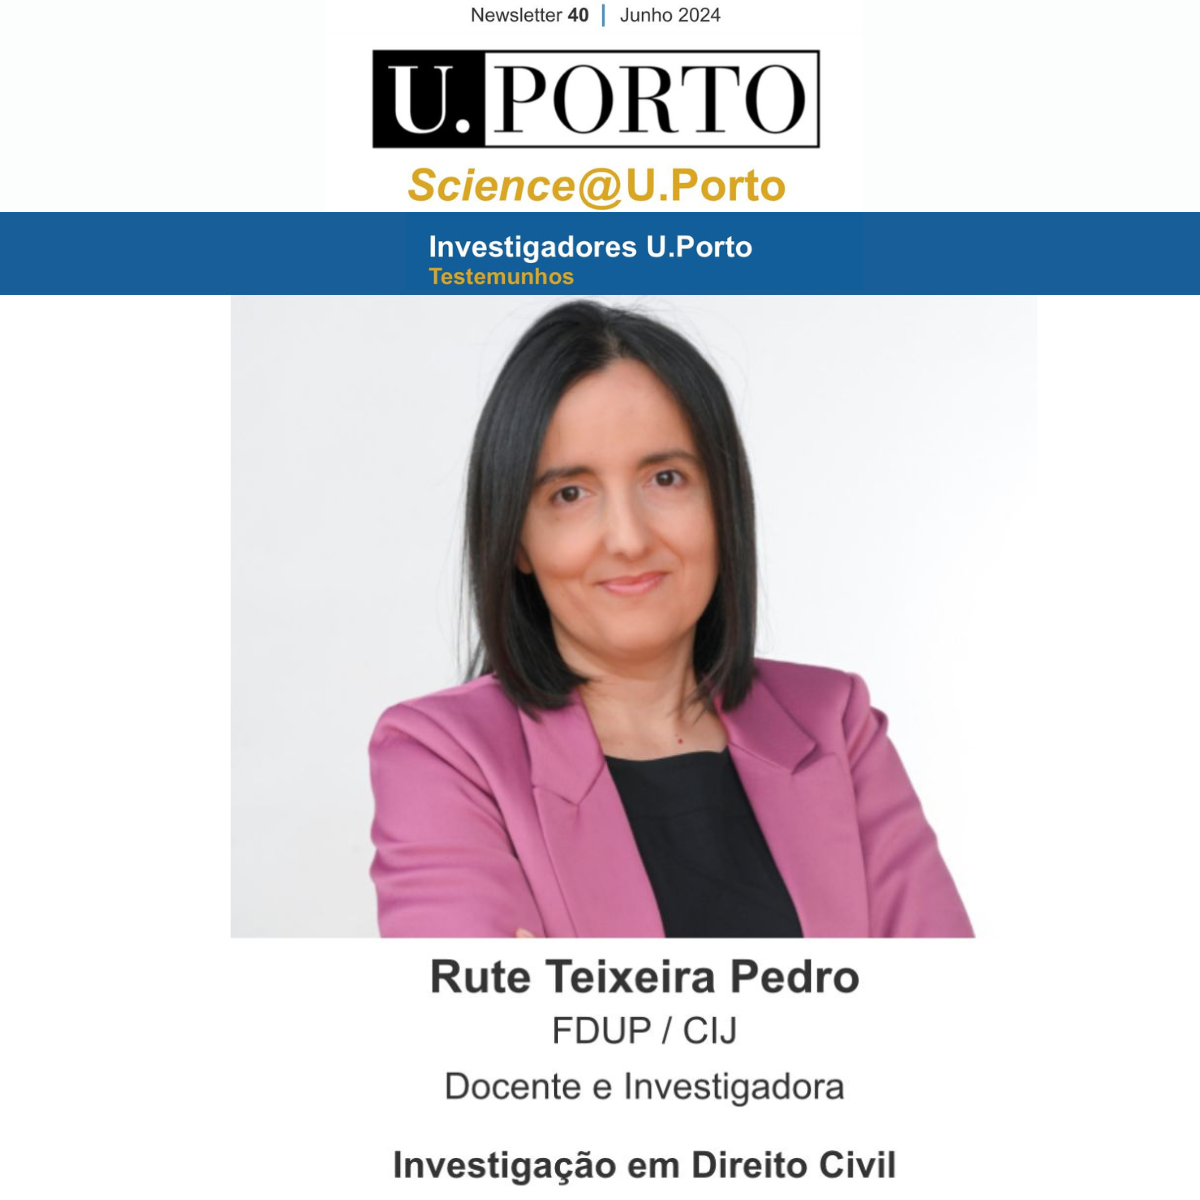 Science@U.Porto destaca subsiretora da FDUP, Rute Teixeira Pedro, na rubrica 𝑰𝒏𝒗𝒆𝒔𝒕𝒊𝒈𝒂𝒅𝒐𝒓𝒆𝒔 𝑼. 𝑷𝒐𝒓𝒕𝒐